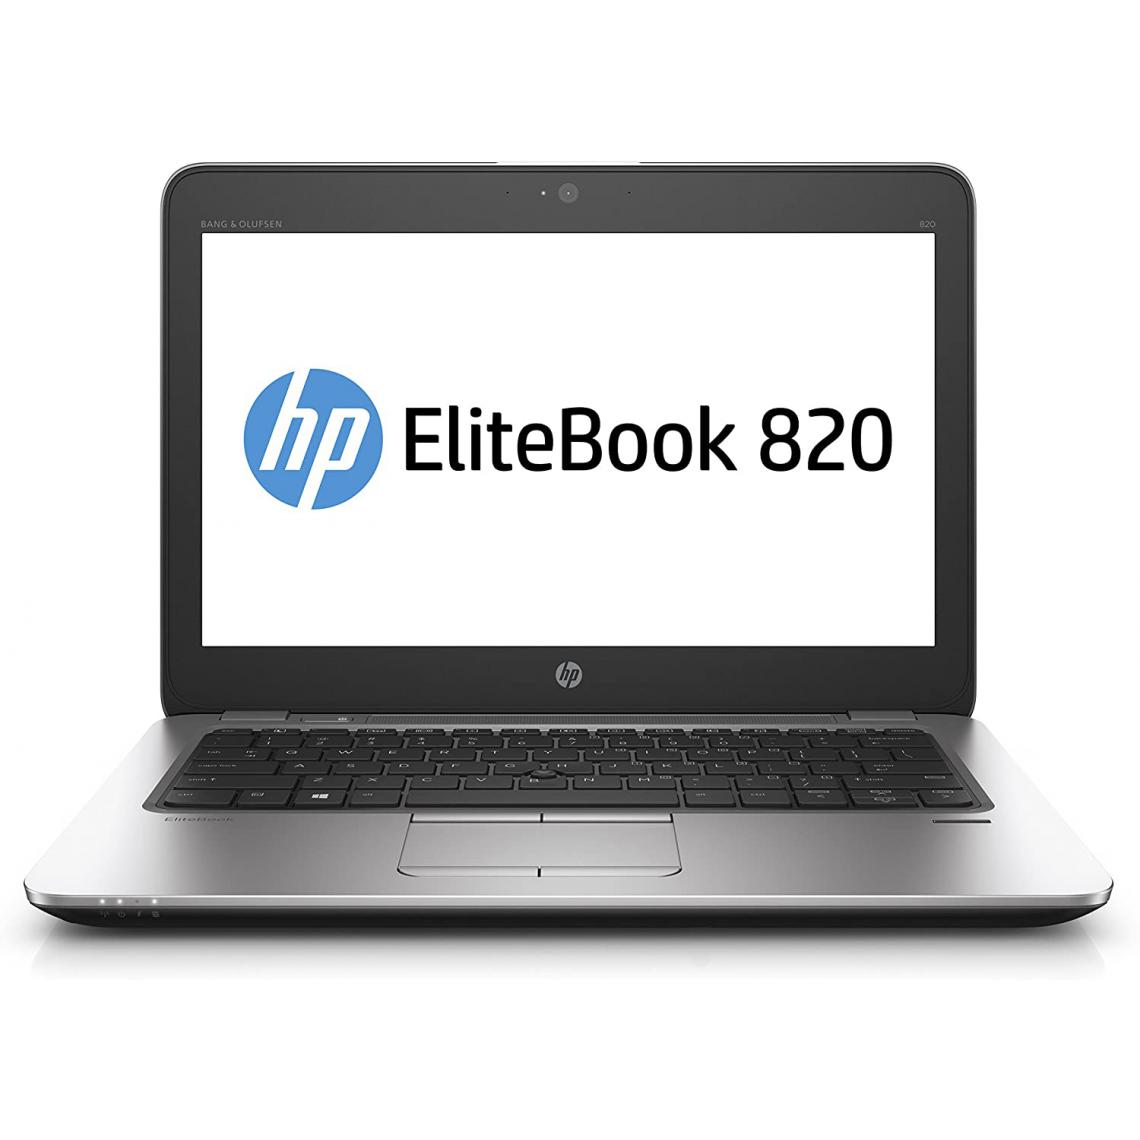 Hp - EliteBook 820 G3, Intel Core i5-6300U, 8GB RAM, 256GB SSD, 12.5"FHD - PC Portable